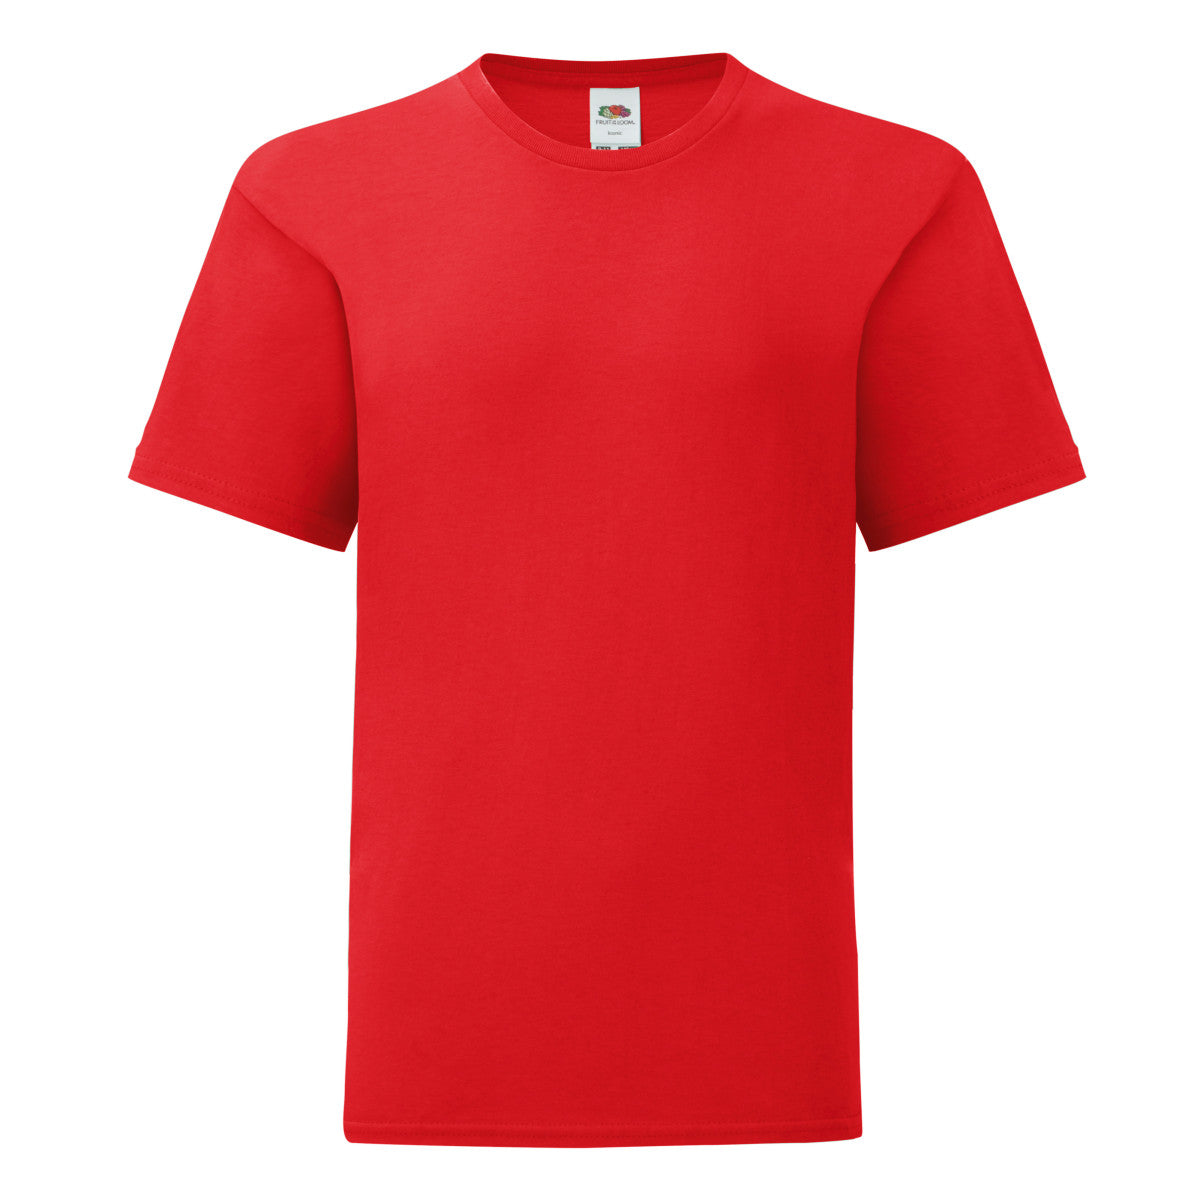 Red Kids T-Shirt